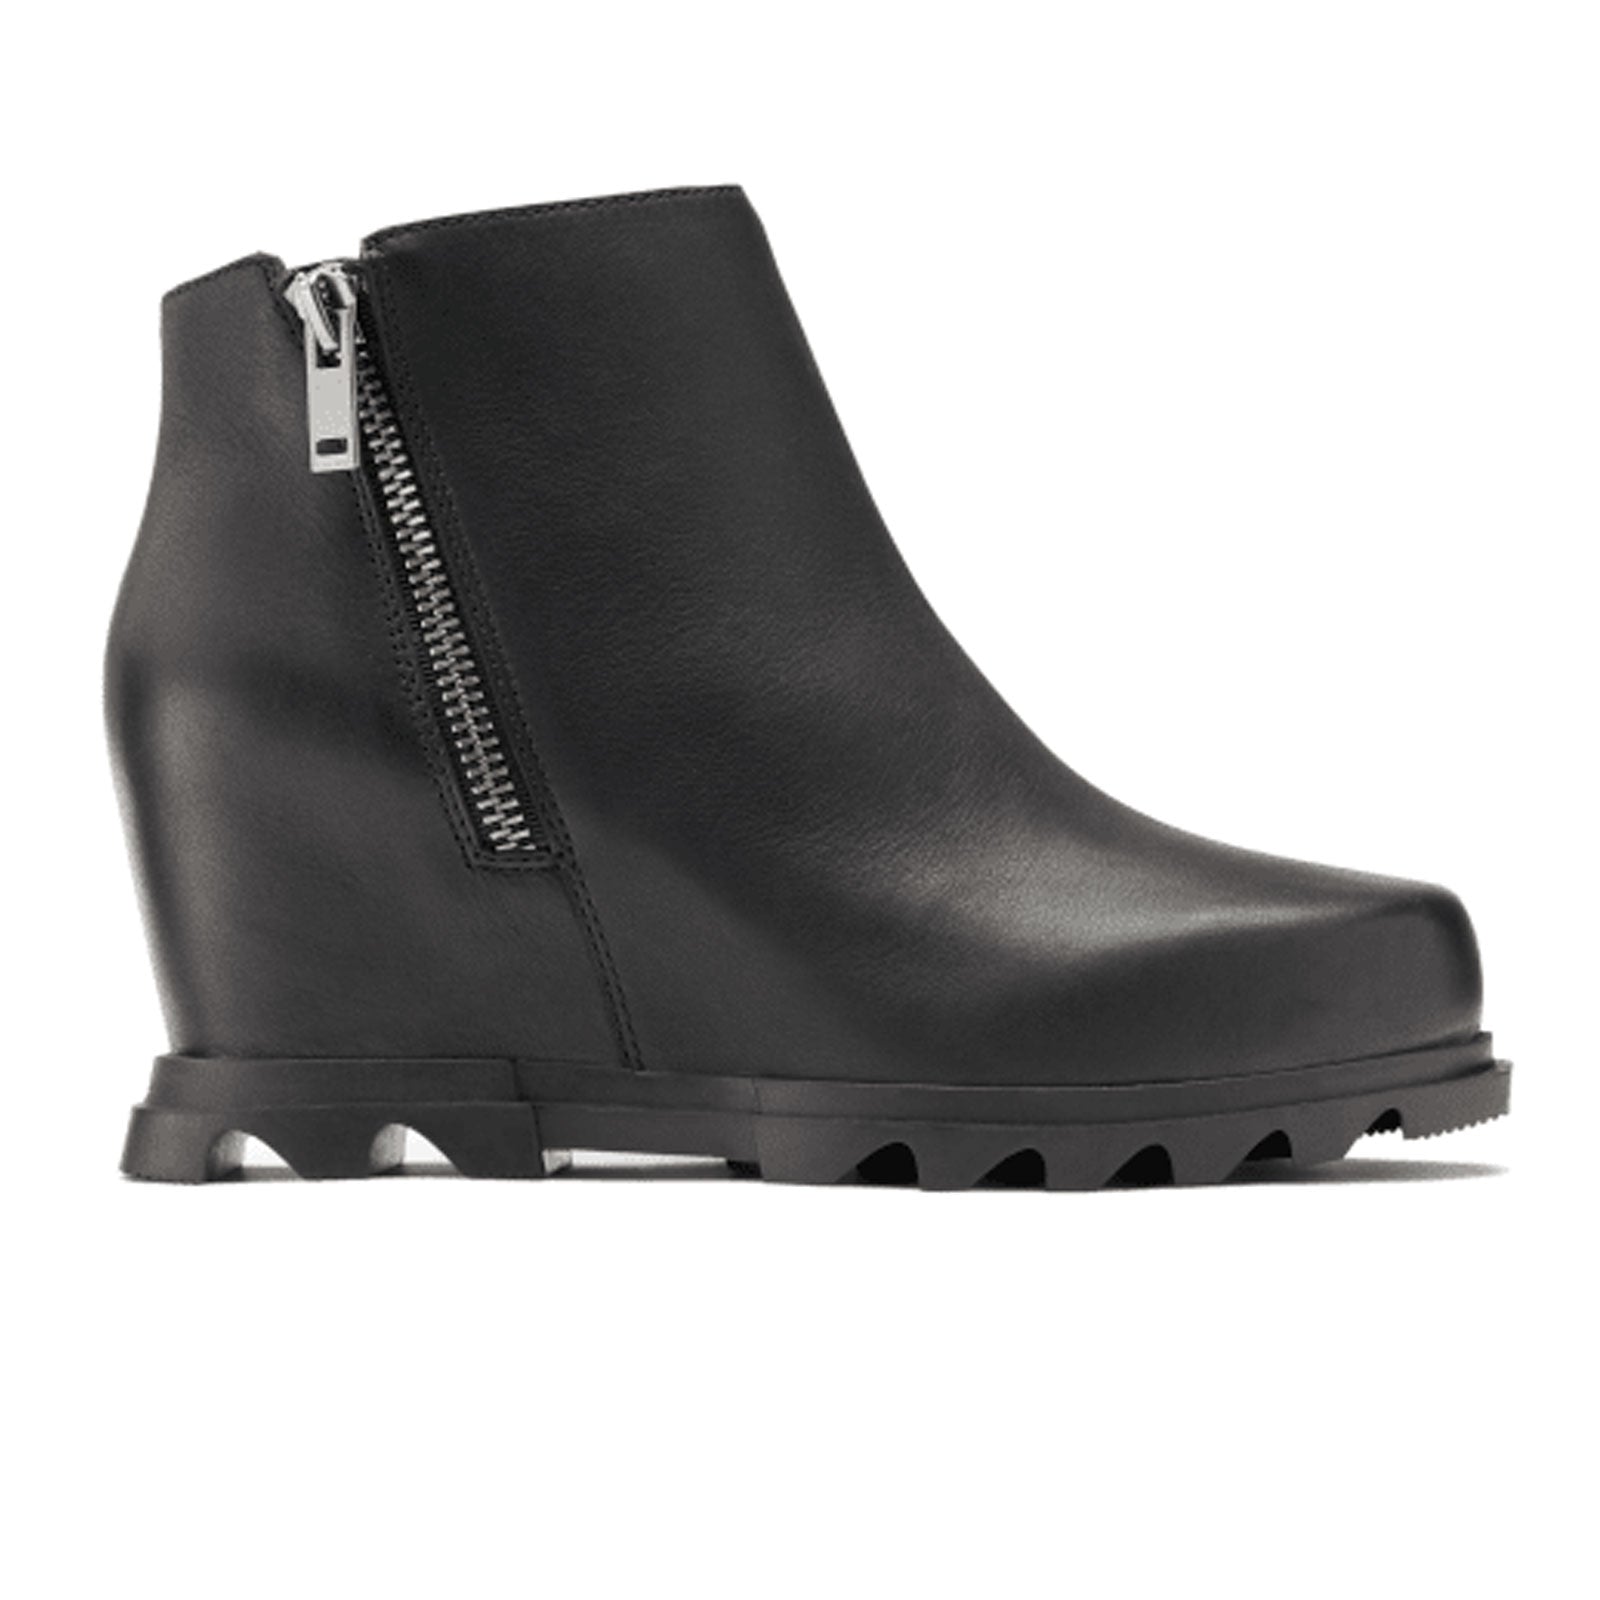 Sorel Joan of Arctic Wedge III Zip (Women) - Black/Sea Salt Boots - Fashion - Wedge - The Heel Shoe Fitters